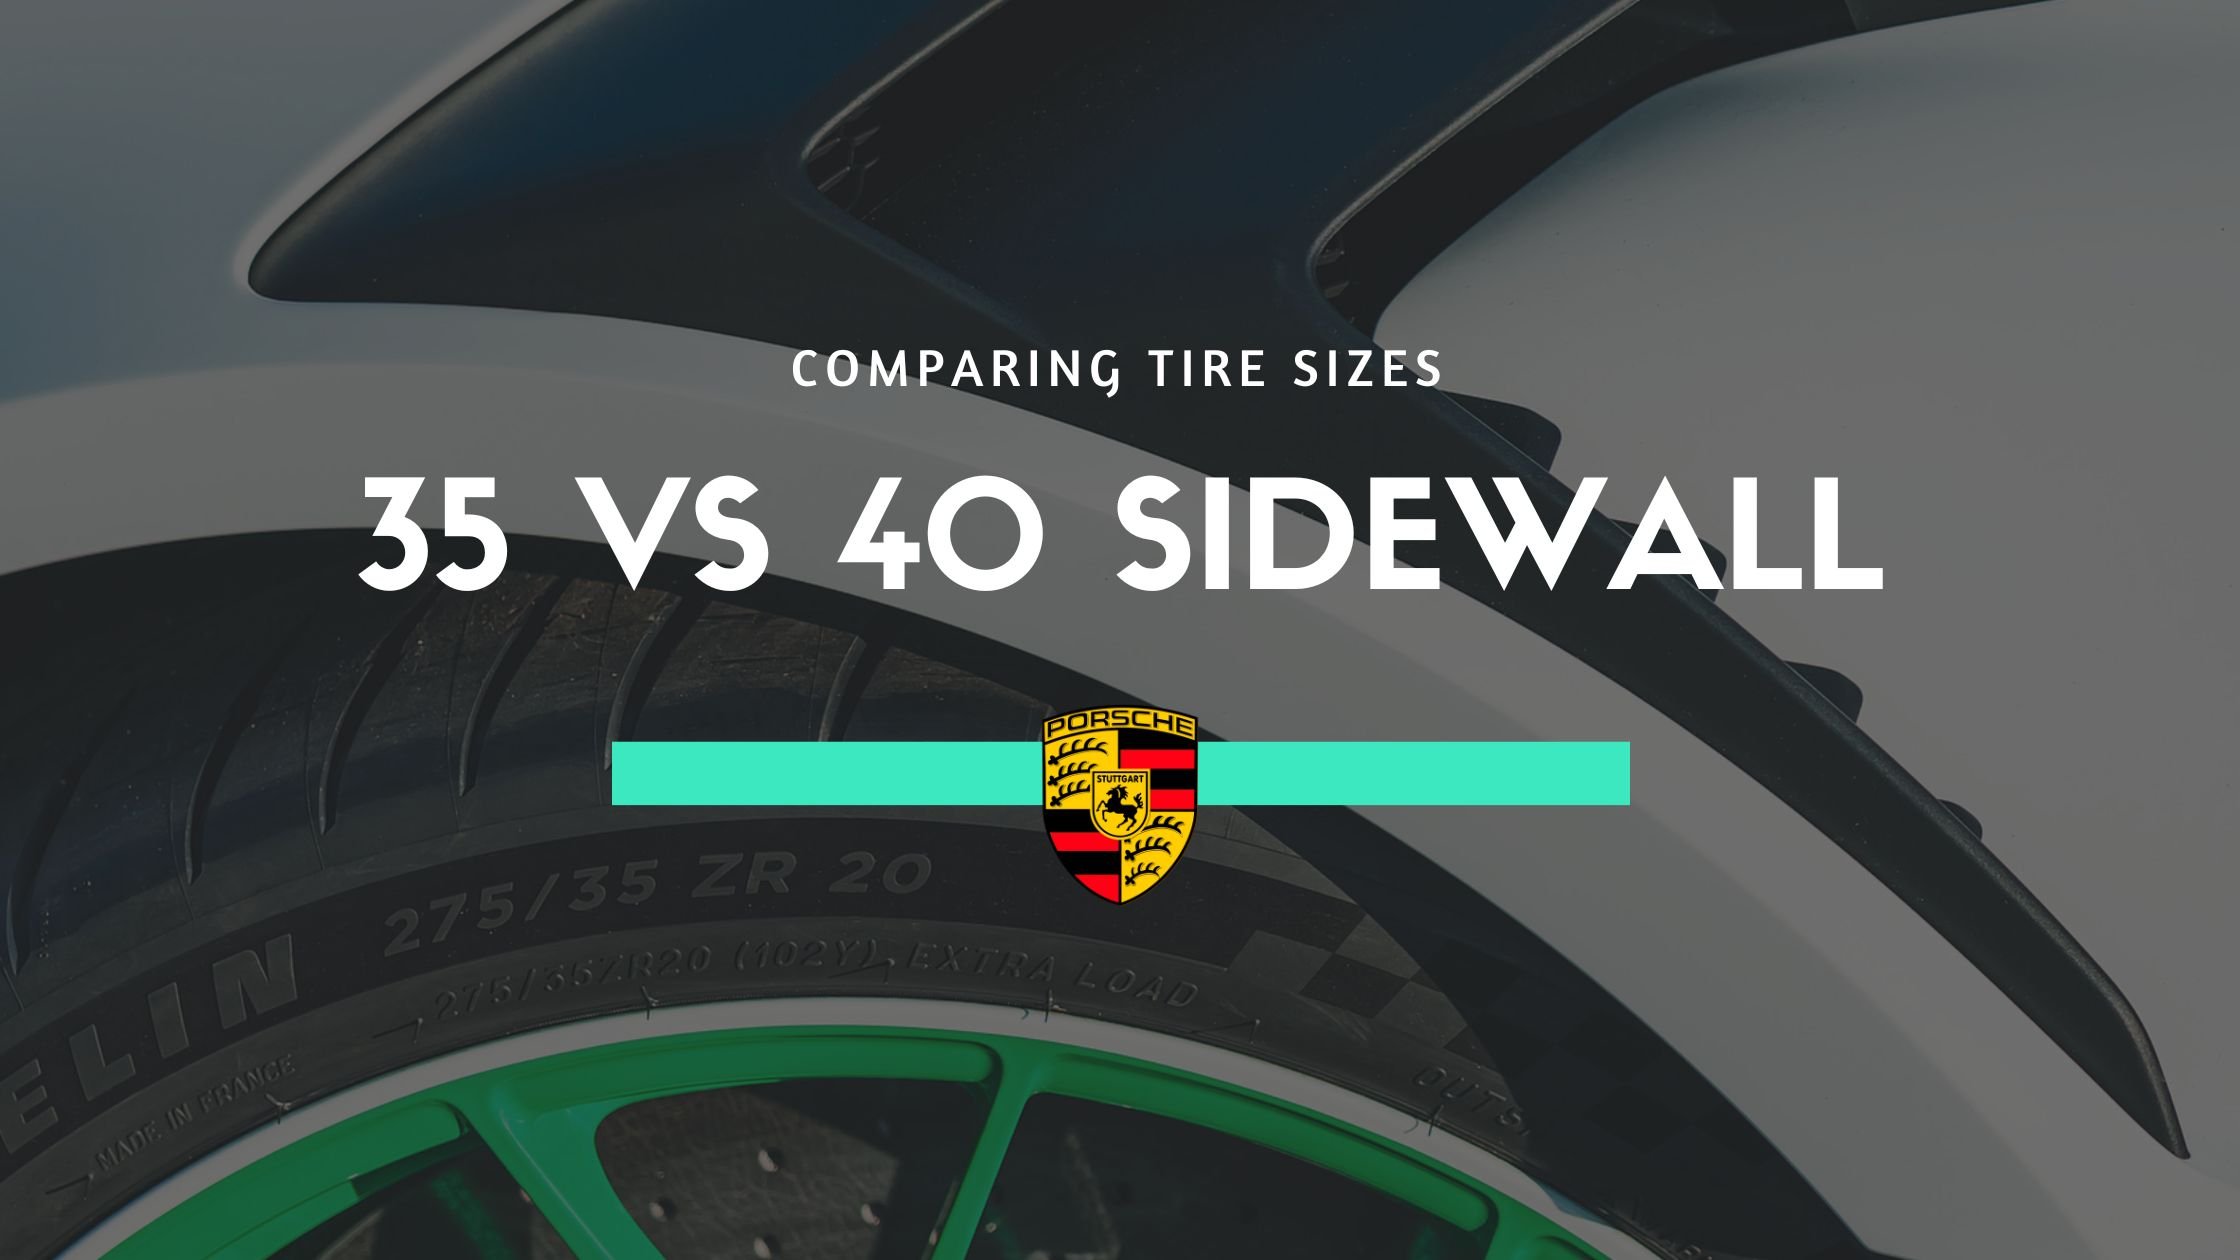 35 vs 40 sidewall